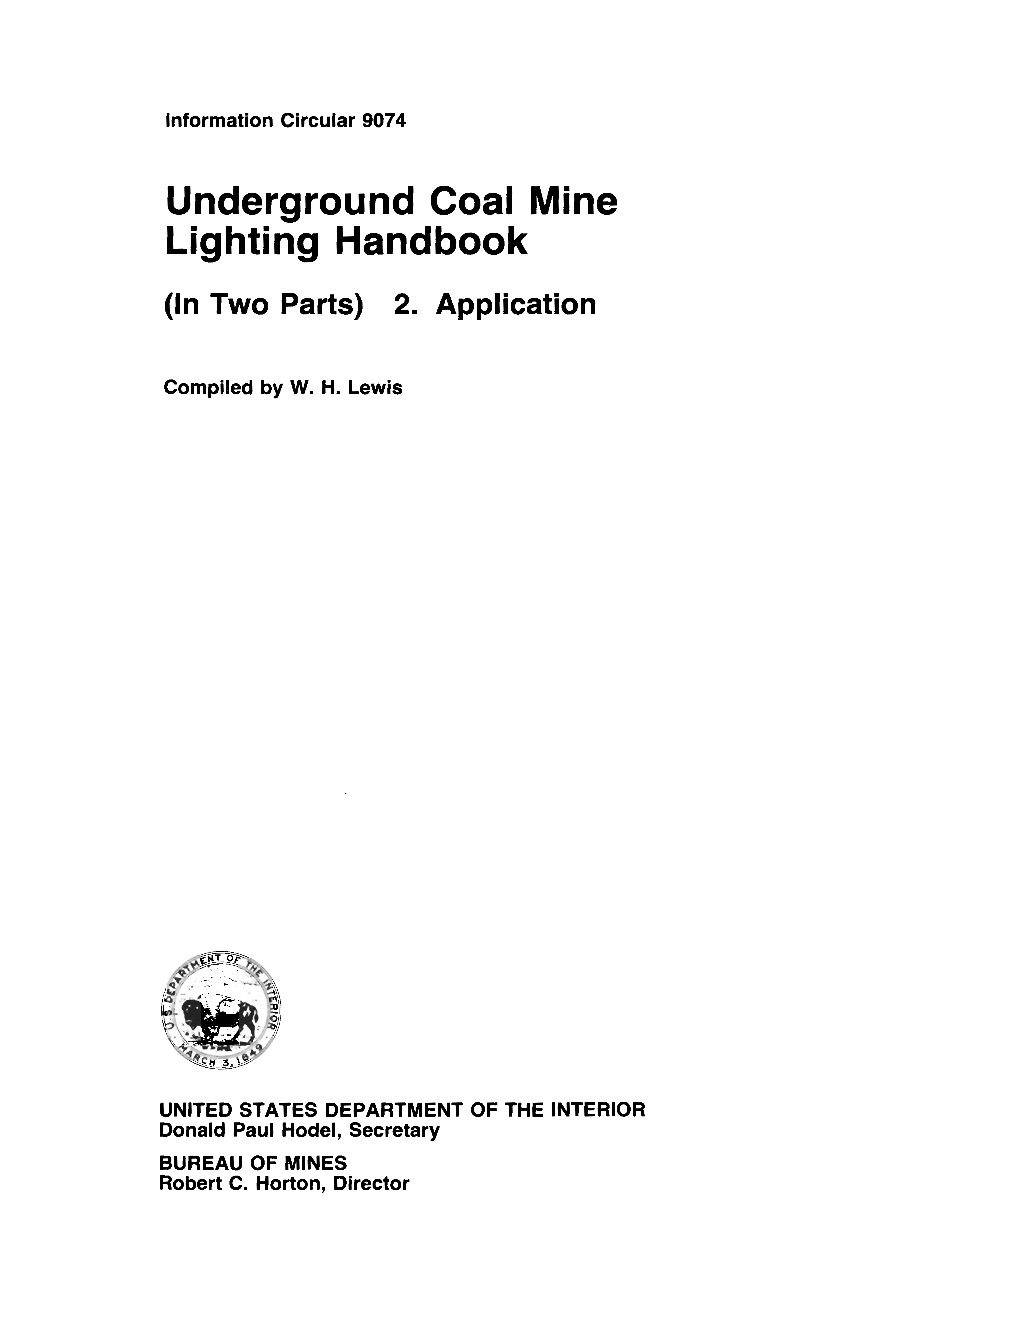 Underground Coal Mine Lighting Handbook (In Two Parts) 2